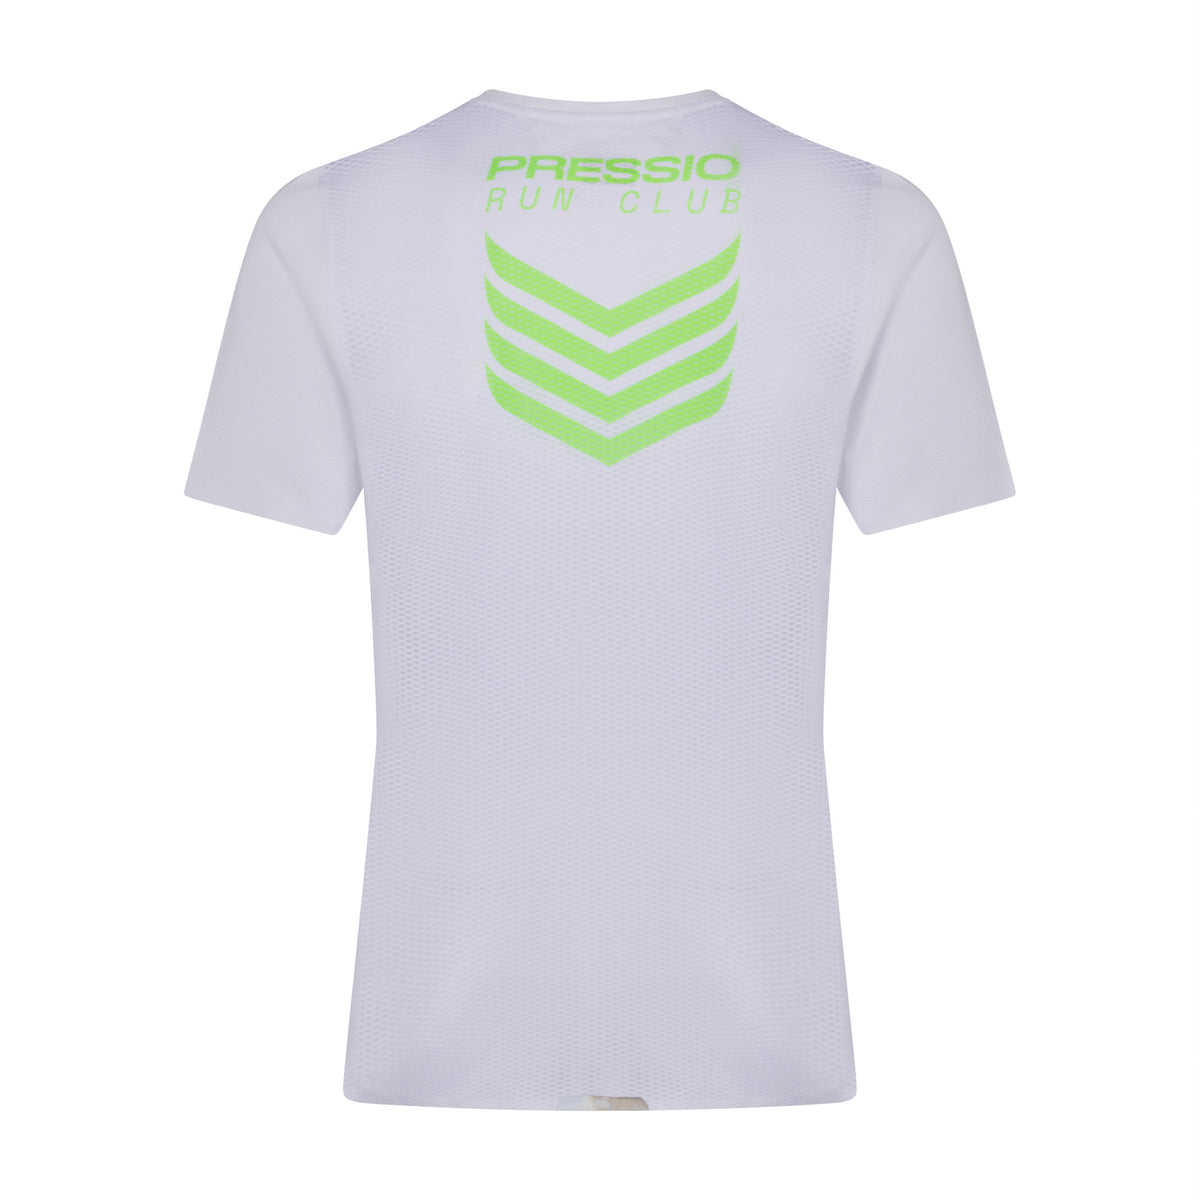 PRESSIO Ārahi Kortermet t-skjorte - Hvit / Digital grønn